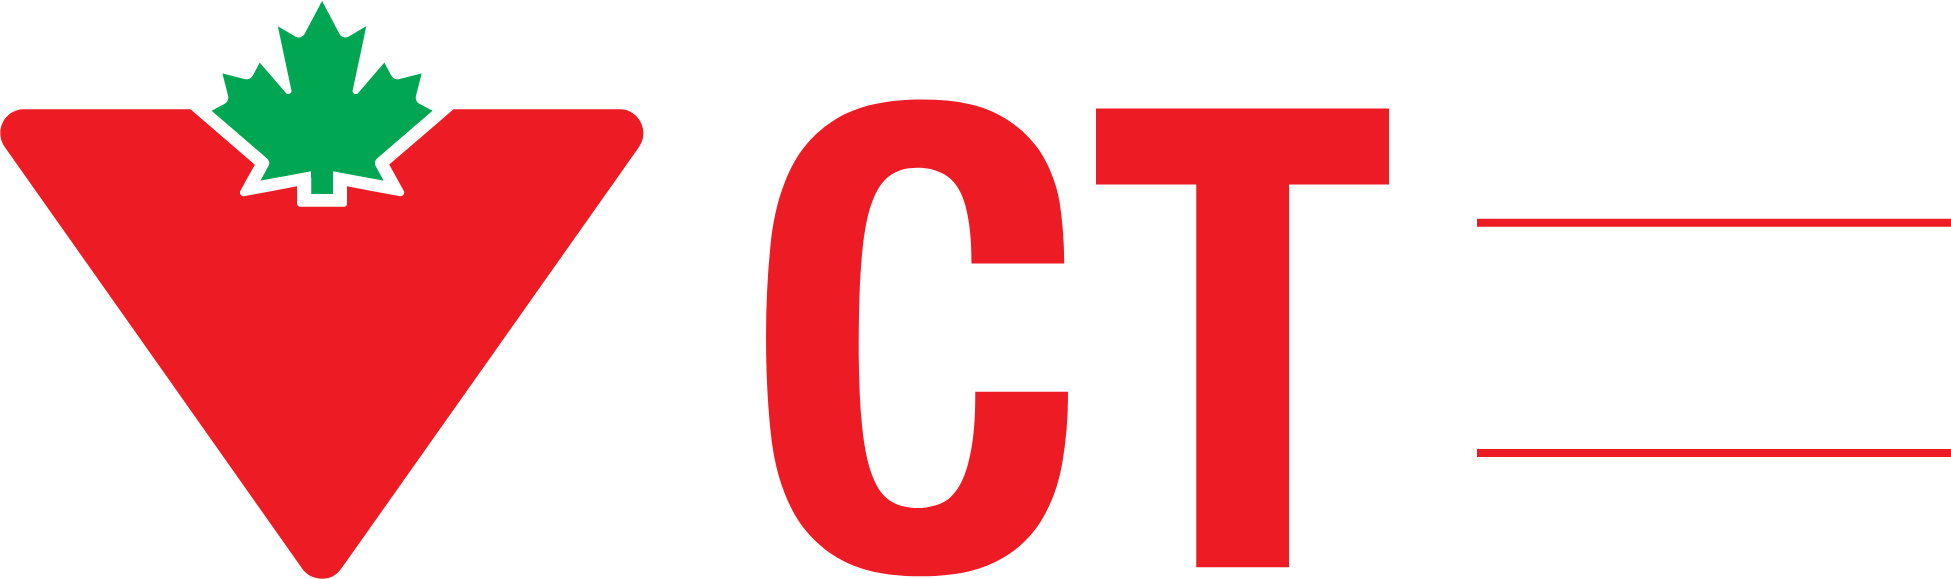 CT REIT logo large for dark backgrounds (transparent PNG)